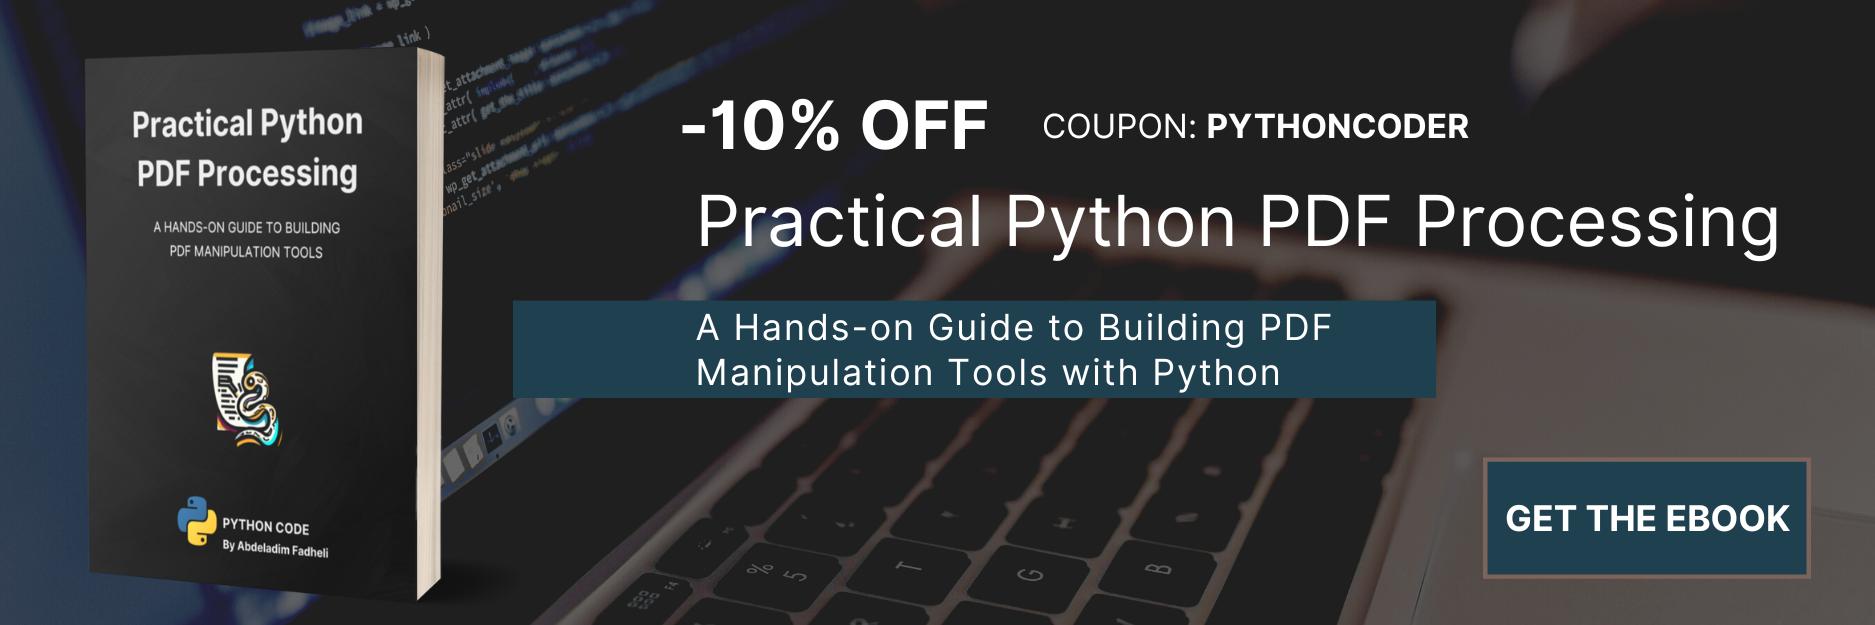 Practical Python PDF Processing EBook